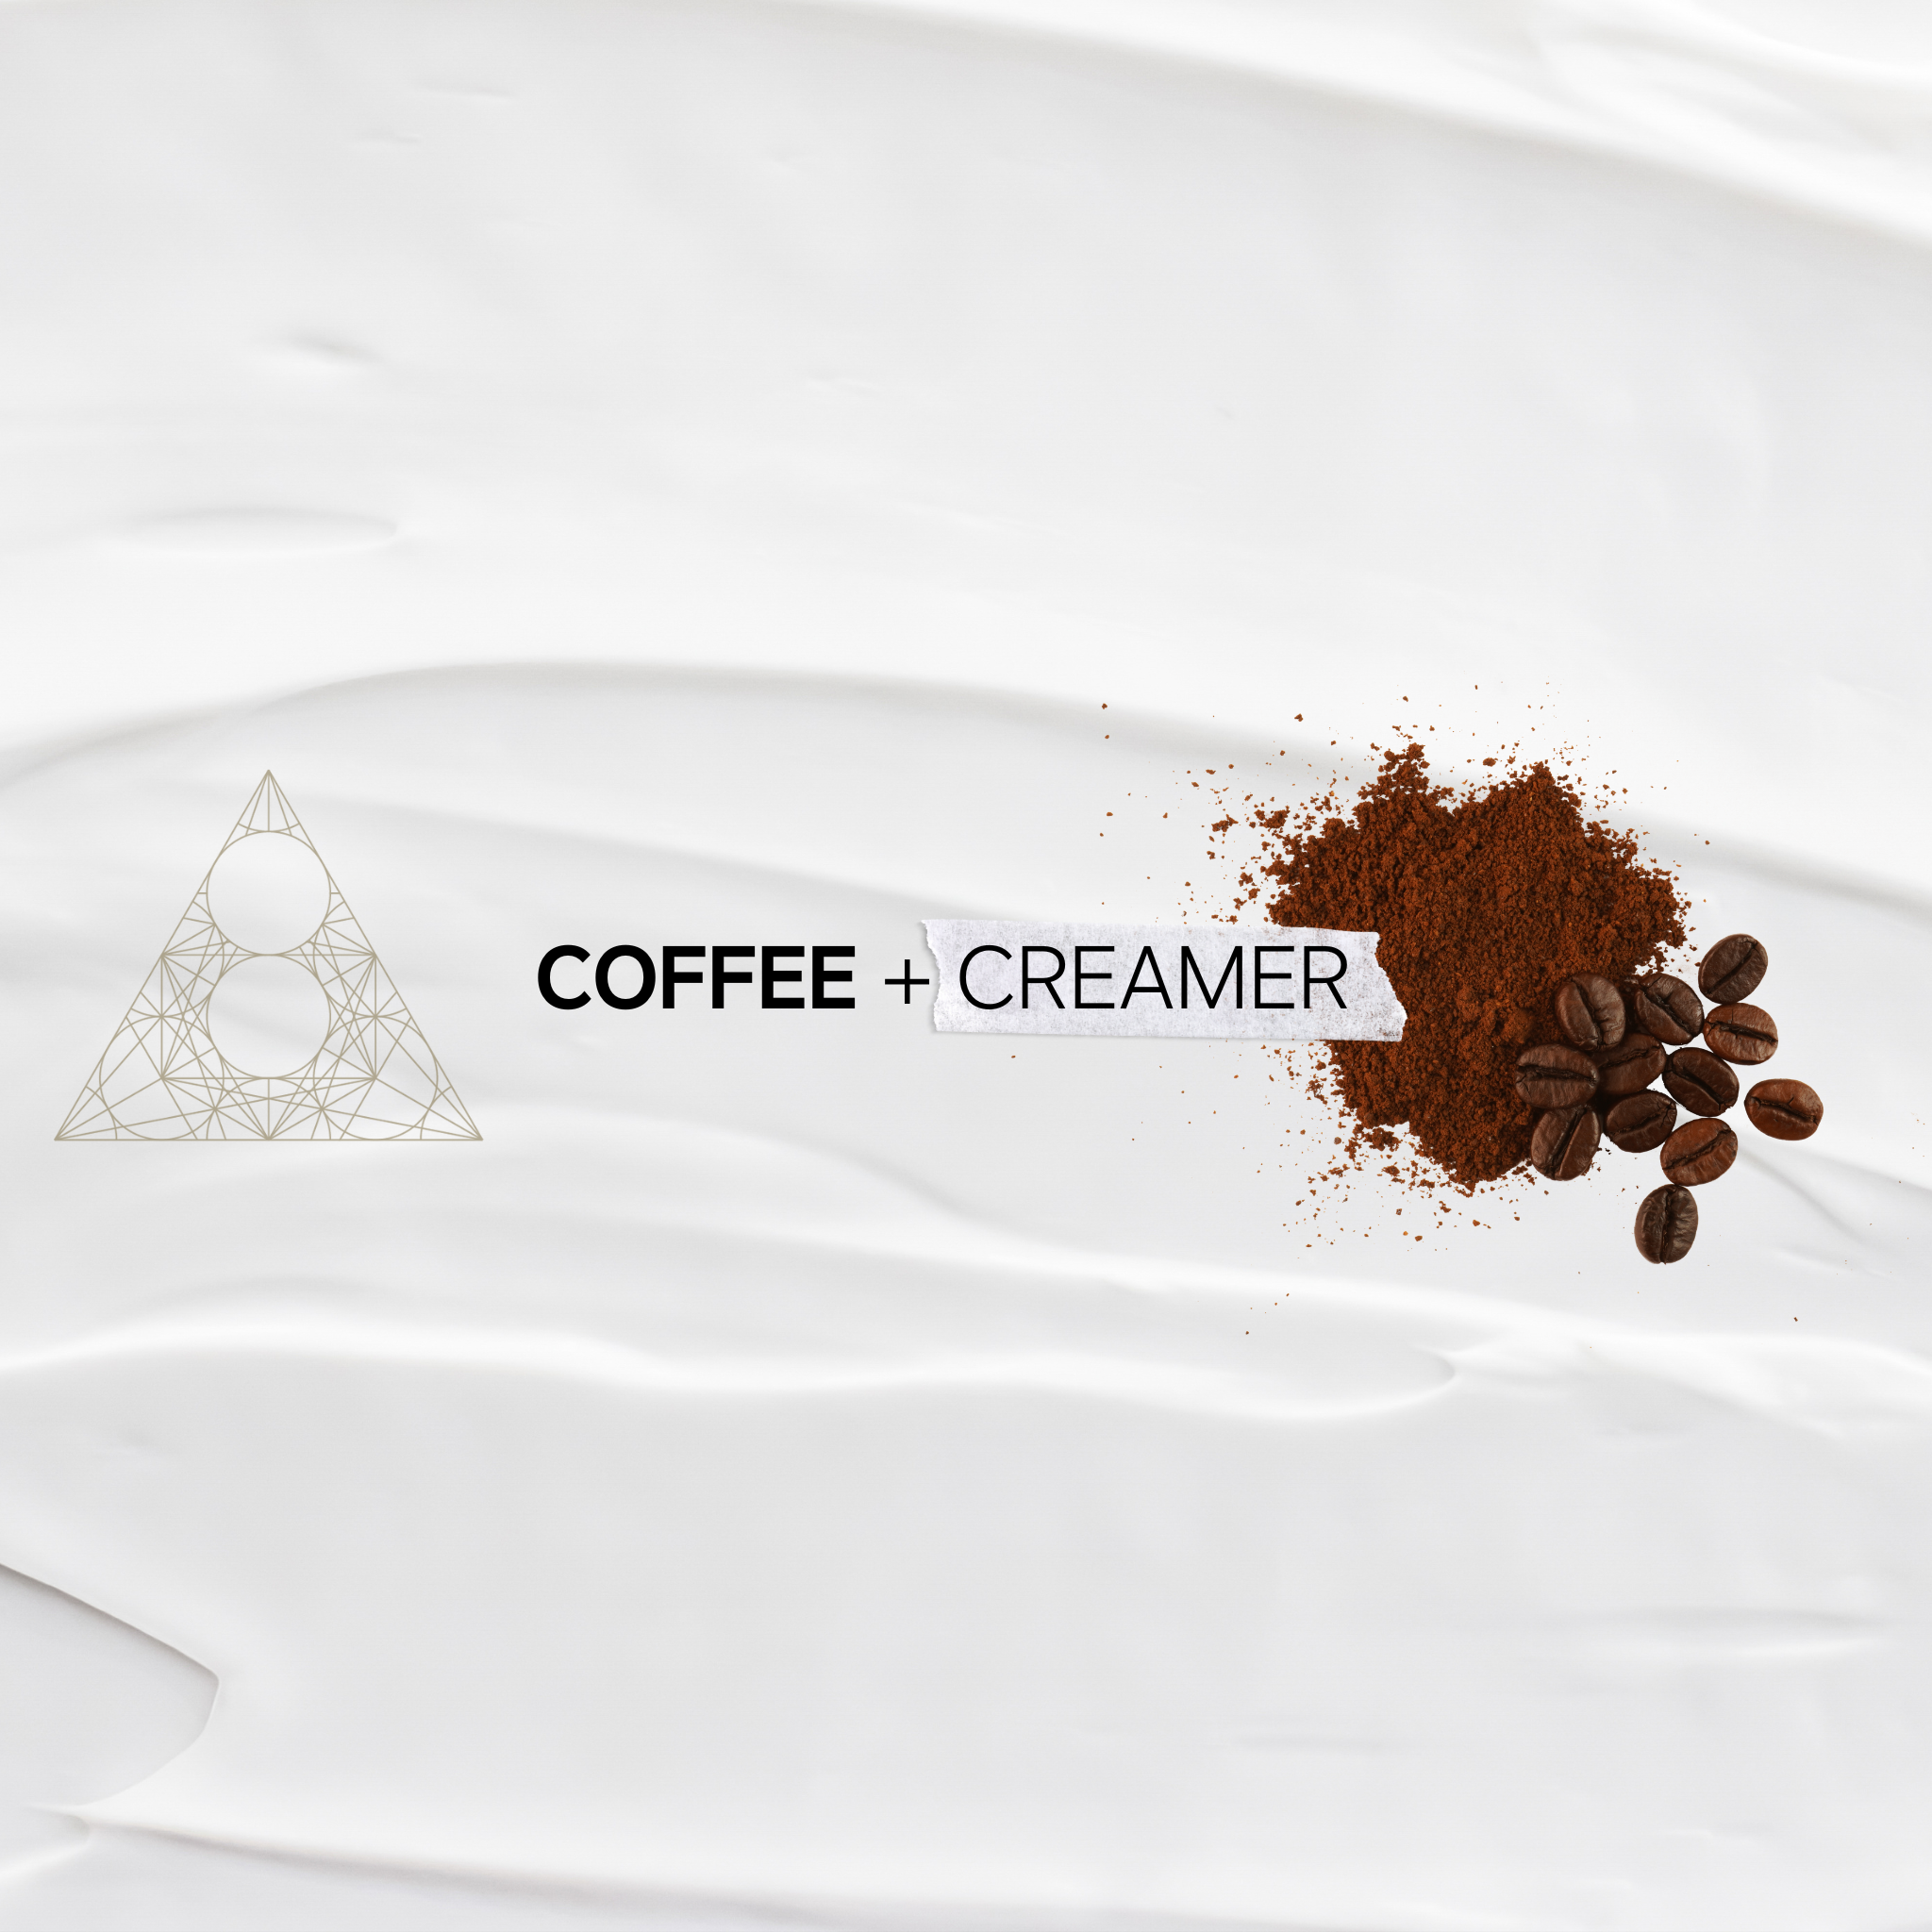 COFFEE + CREAM